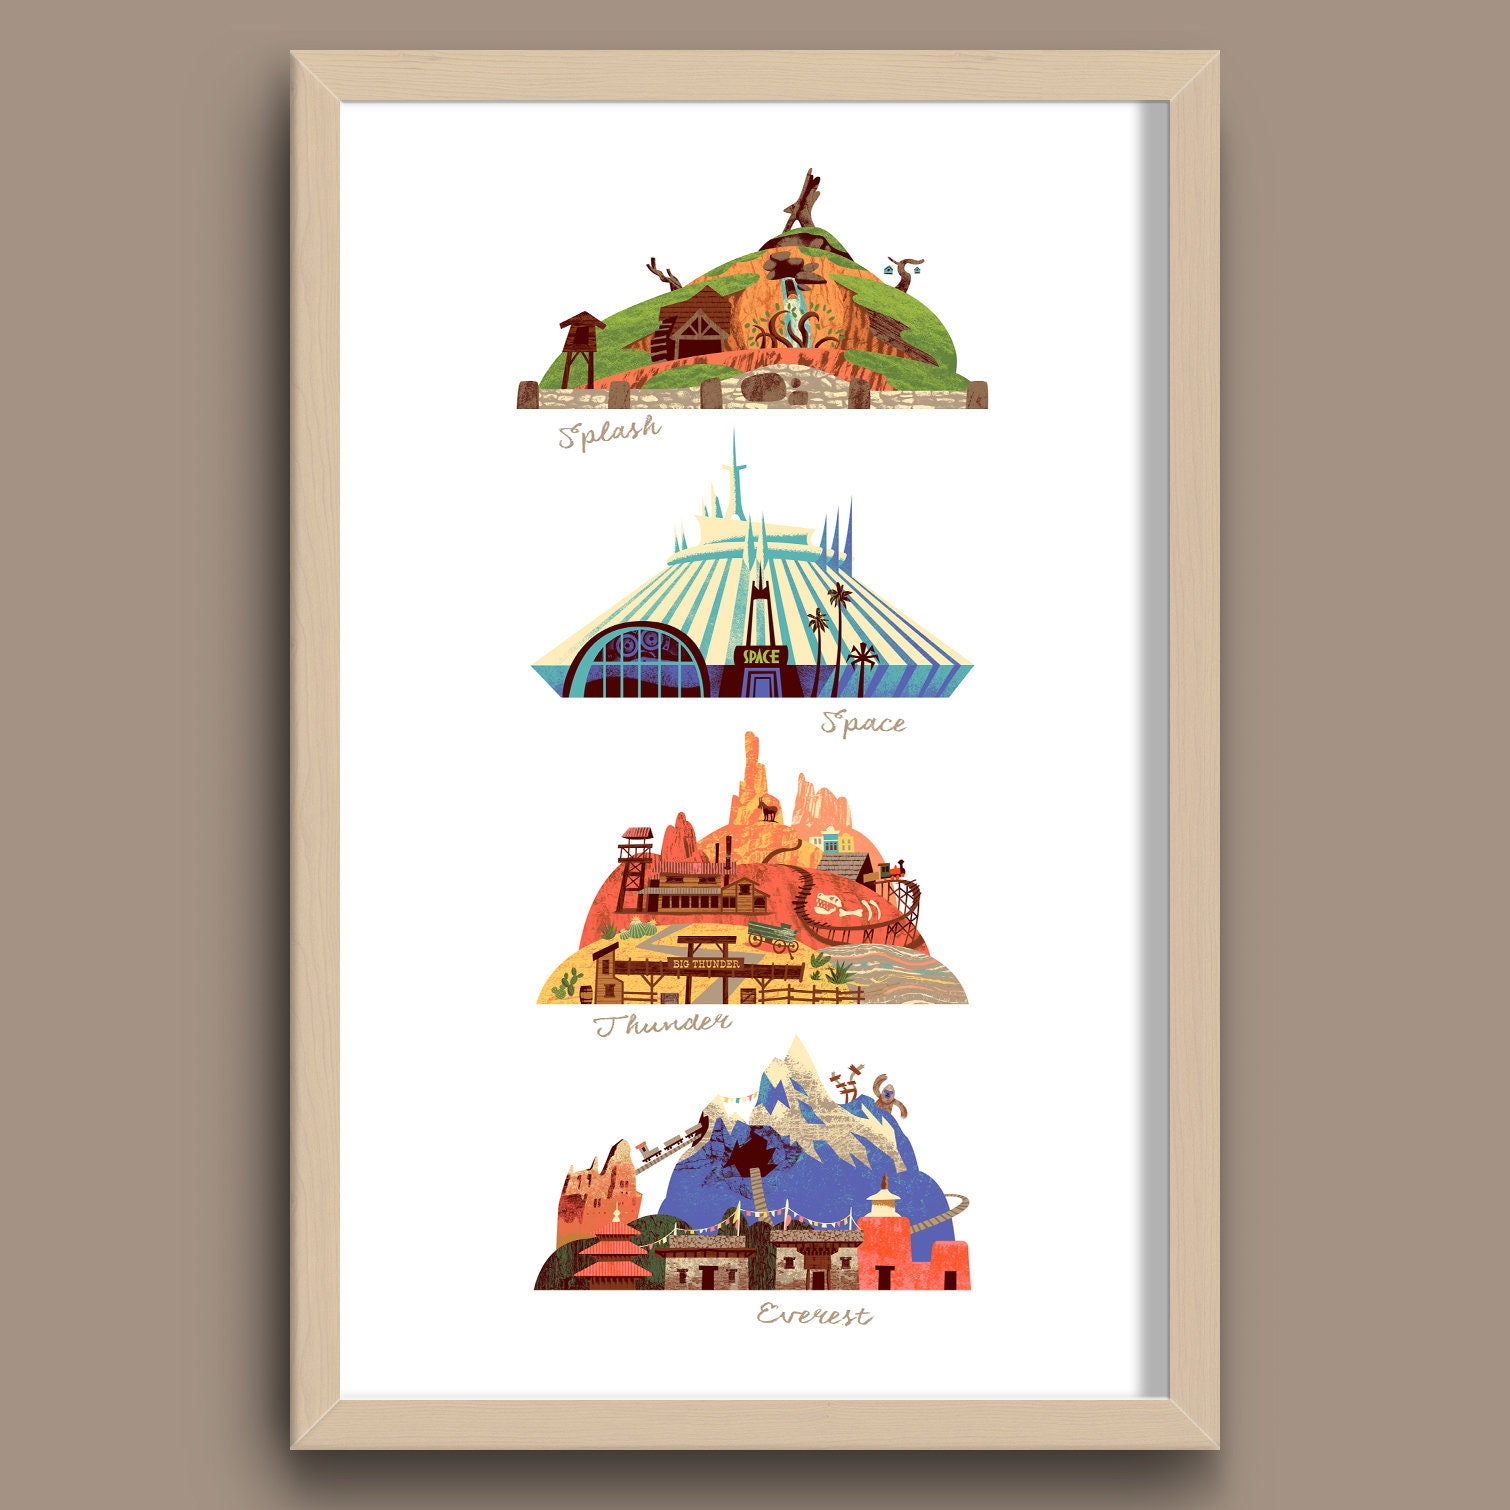 The Disney Mountains Print, Walt Disney World, Splash, Space, Big Thunder,  Everest 